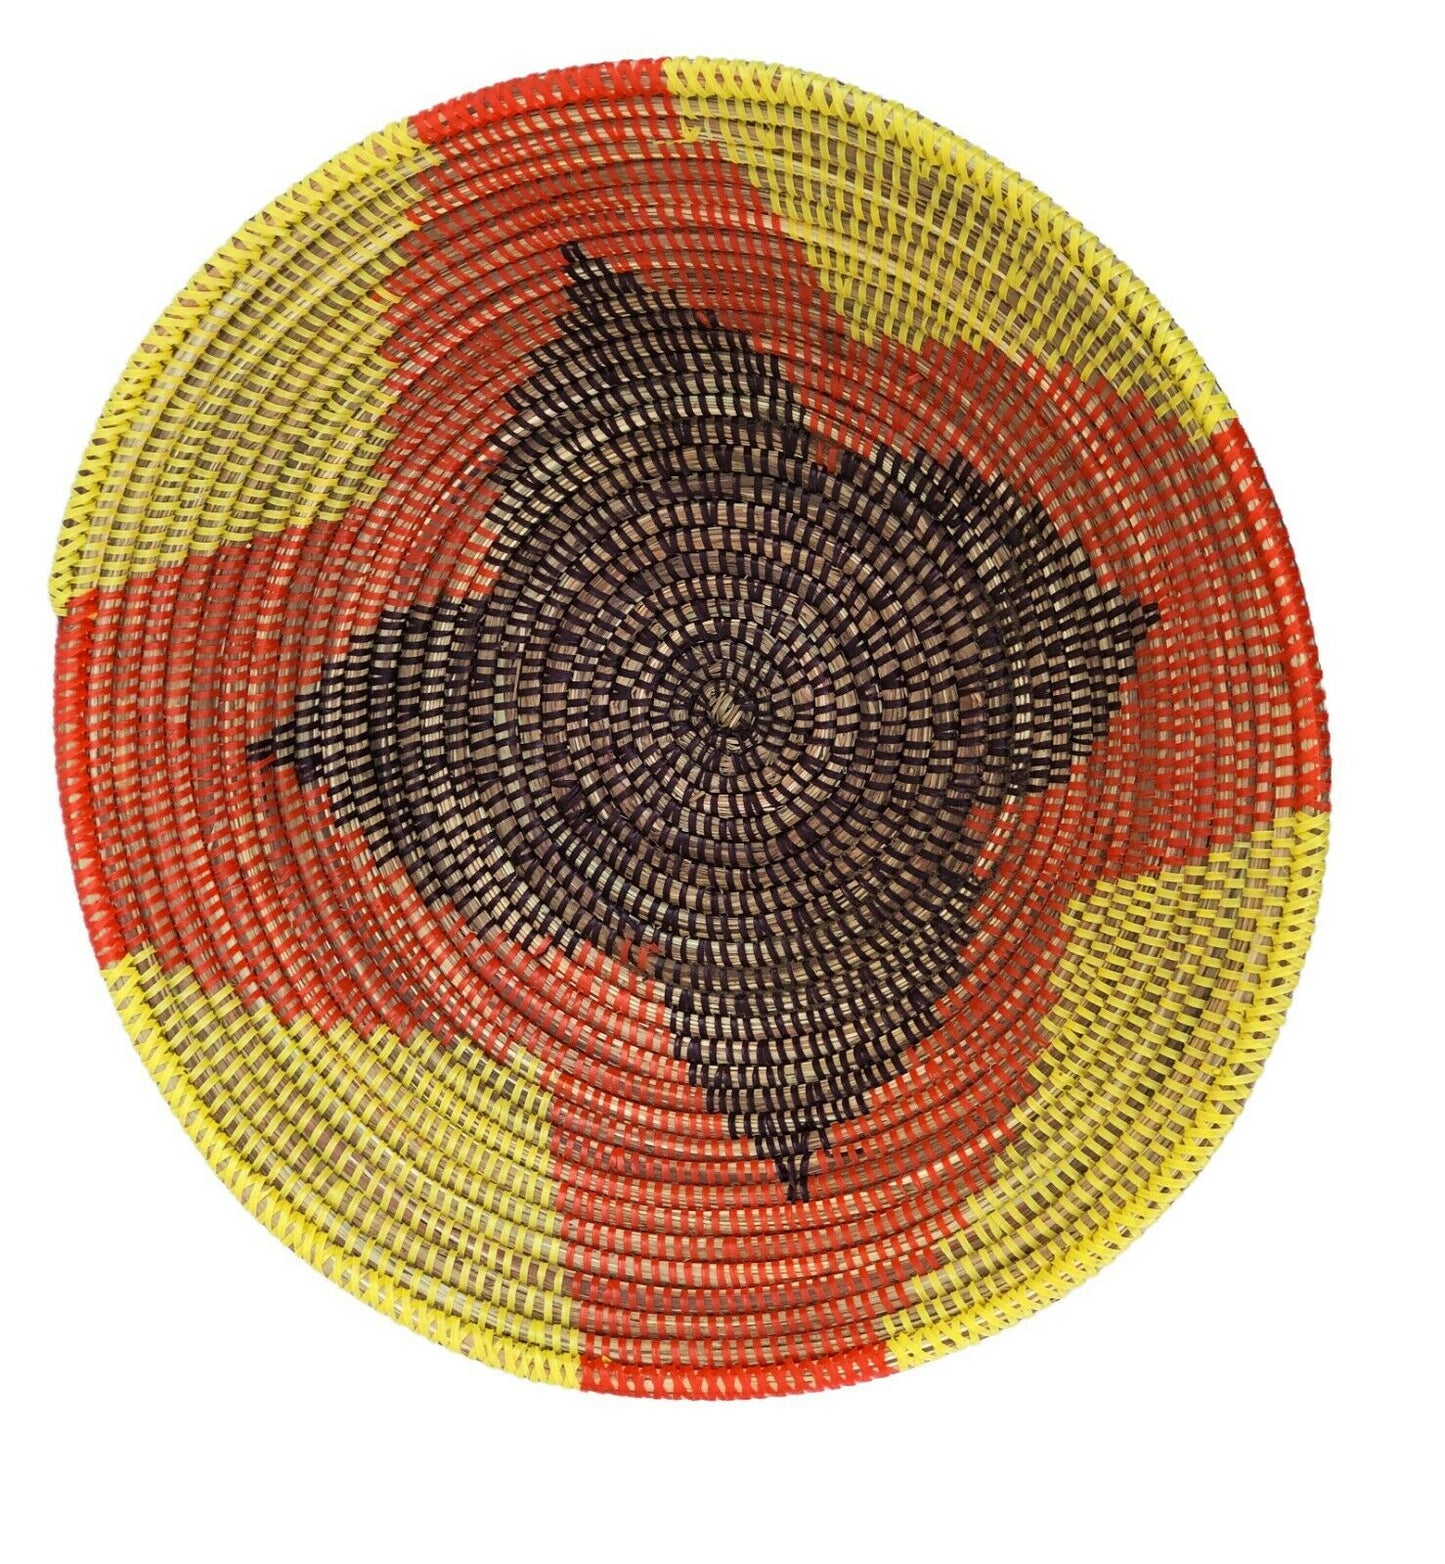 #510 Handmade Woven Wolof Basket From Senegal 16.5" in Diameter